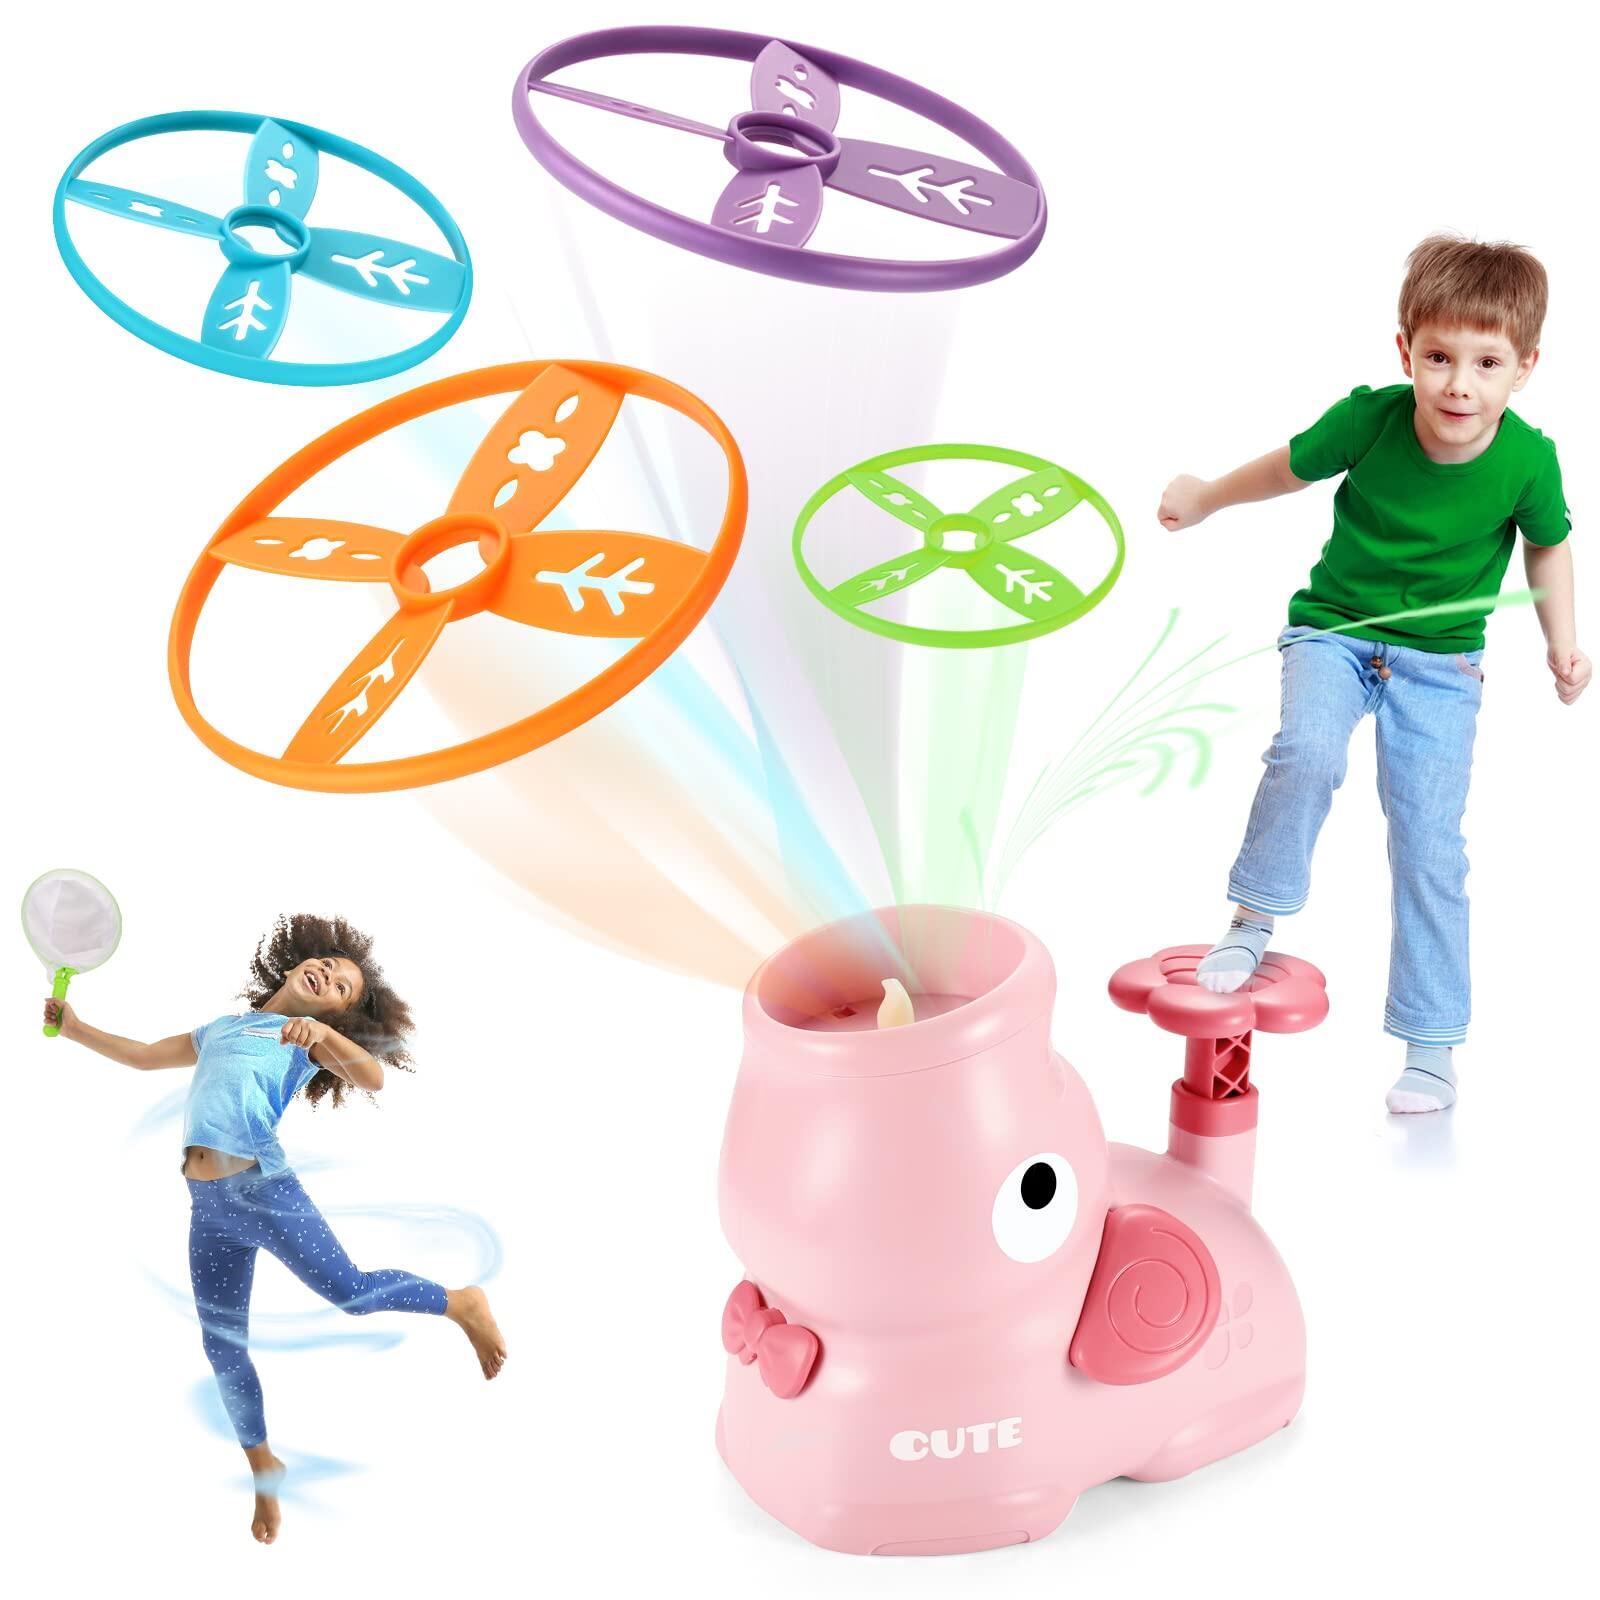 Kids Outdoor Game Flying Discs Air Rocket Laher Feet